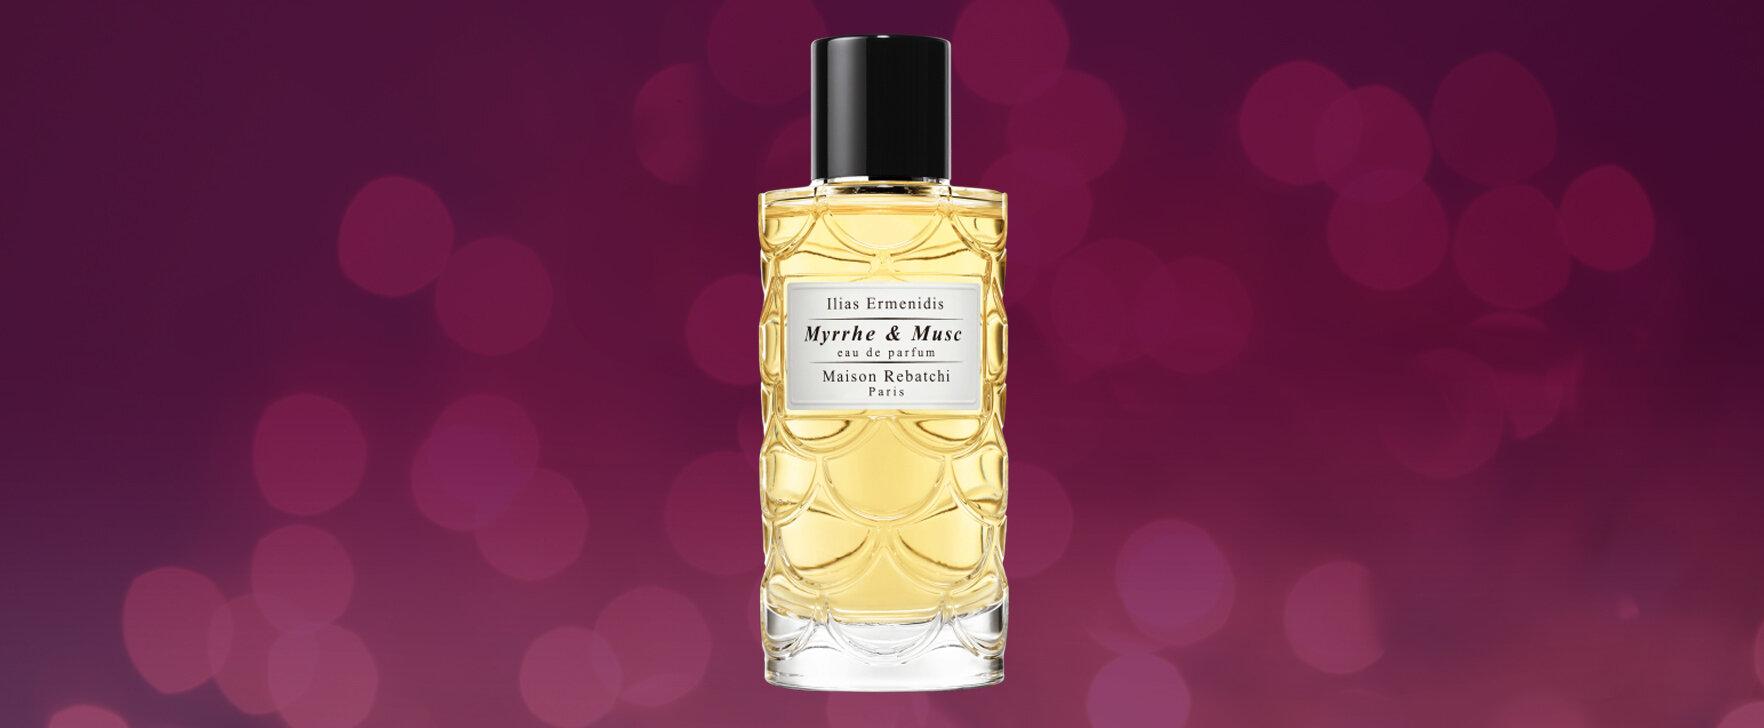 Myrrh & Musc - The Woody-oriental Fragrance Novelty by Maison Rebatchi